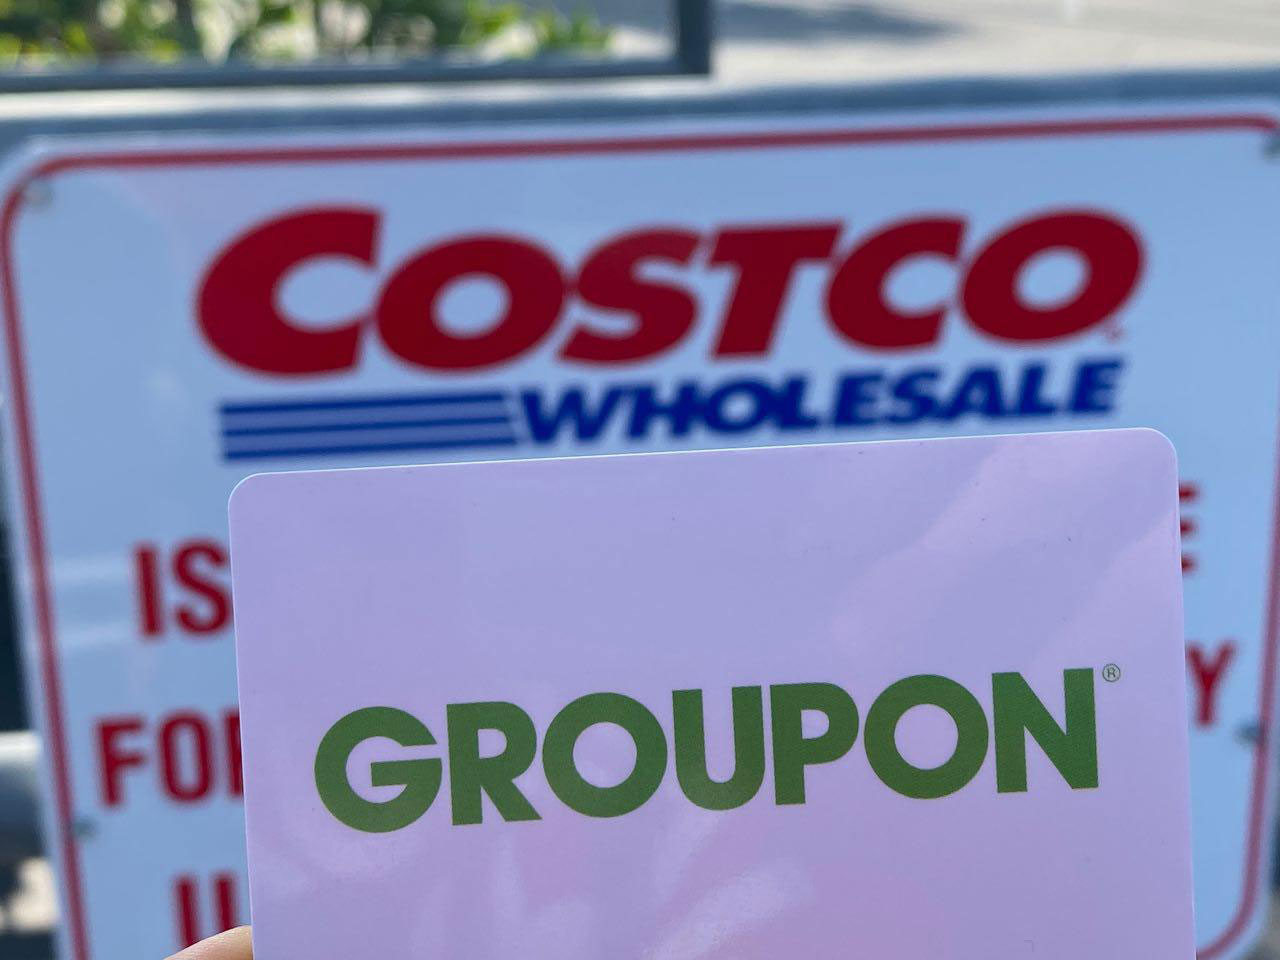 Groupon Costco Membership Promotion 2019